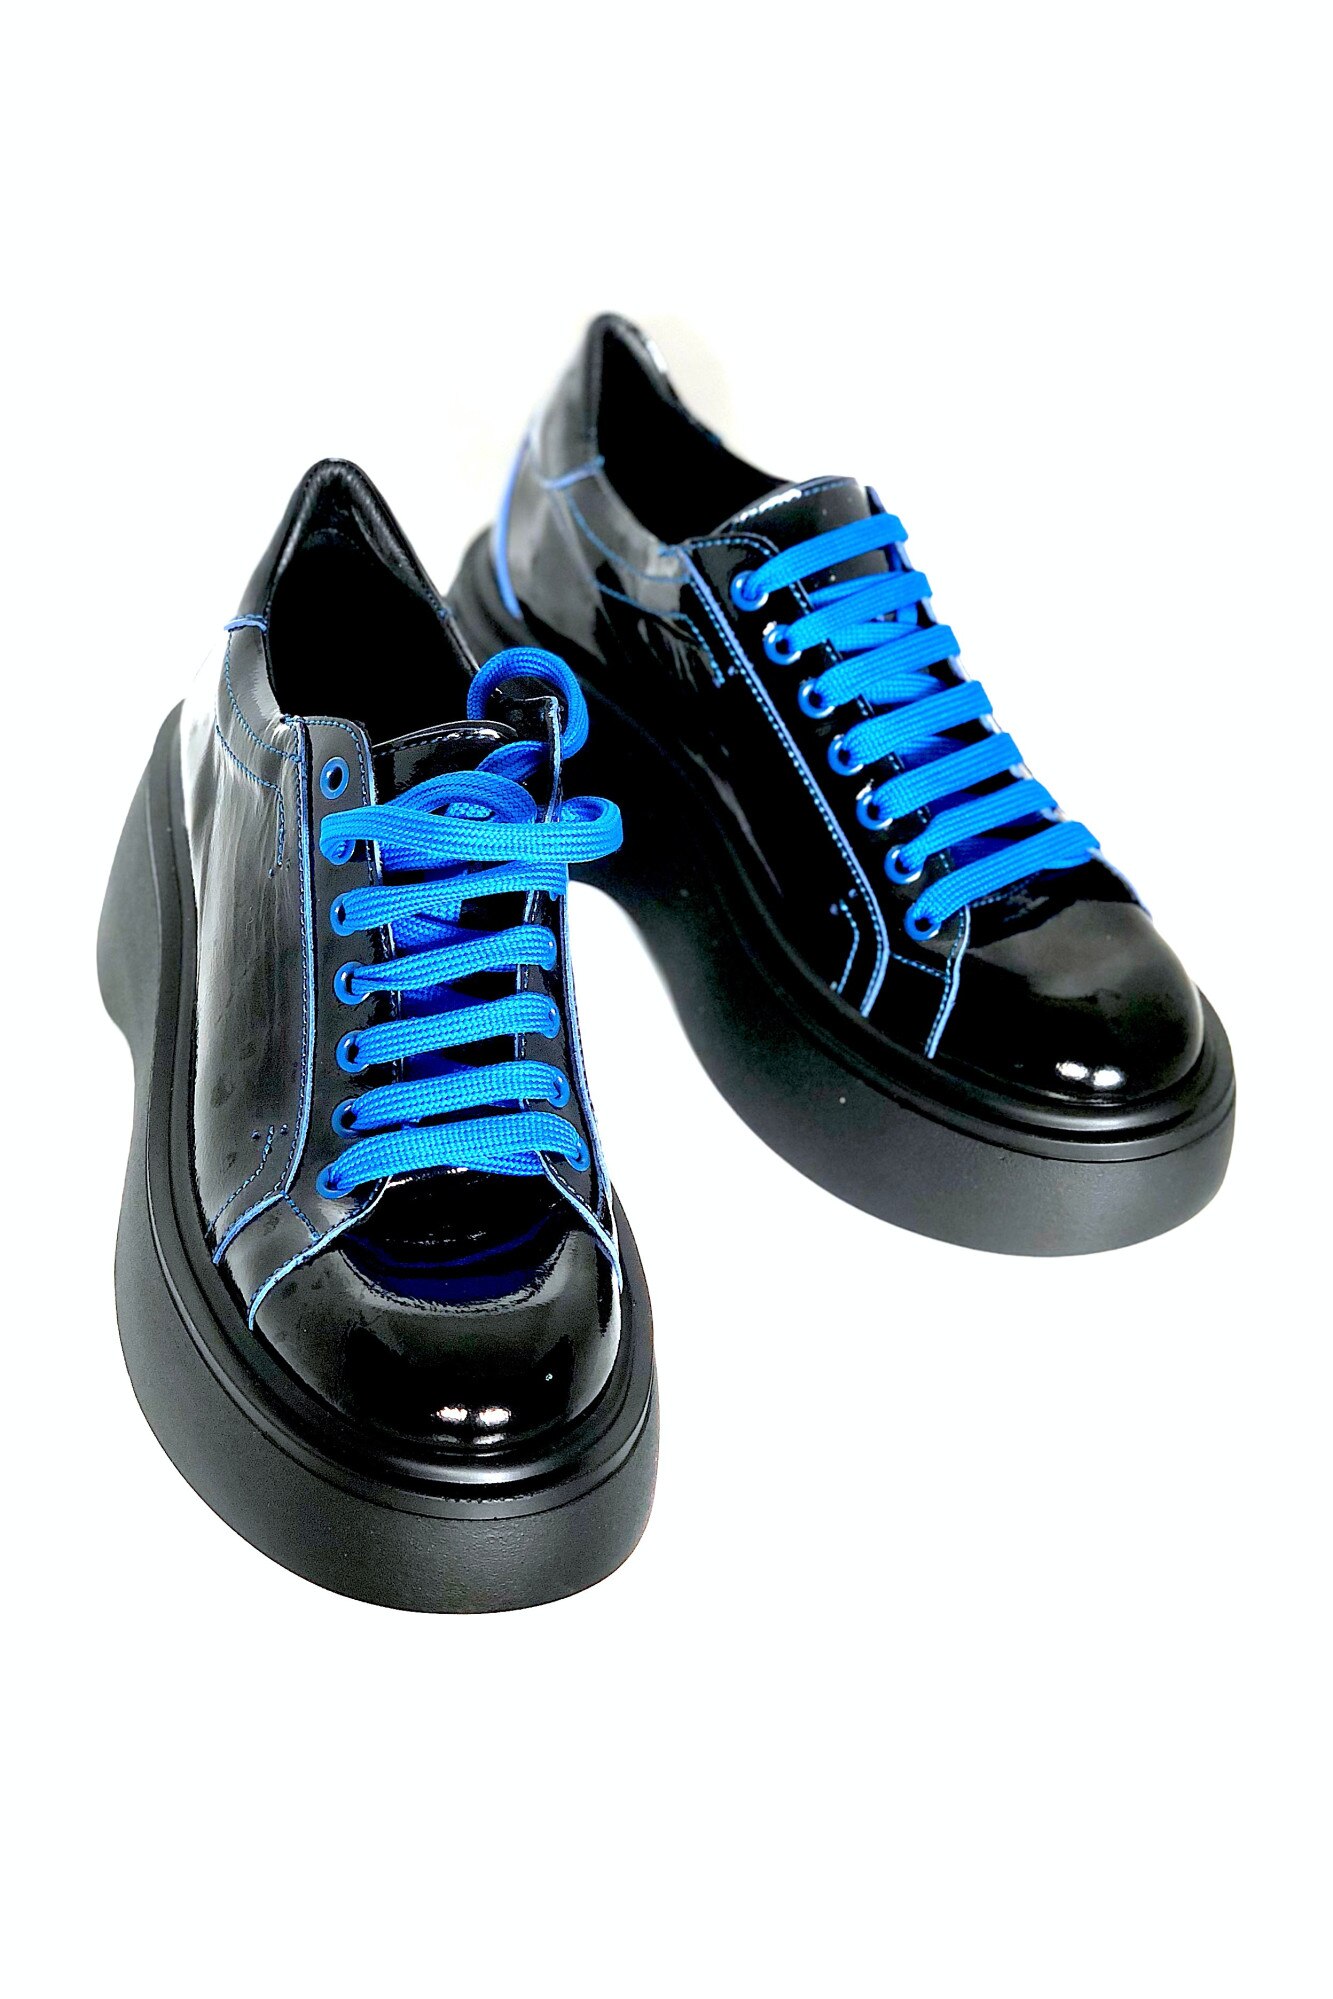 Flicker Unsatisfactory Antagonism Pantofi casual dama, Cunadena, negru albastru, piele, 38 EU - eMAG.ro